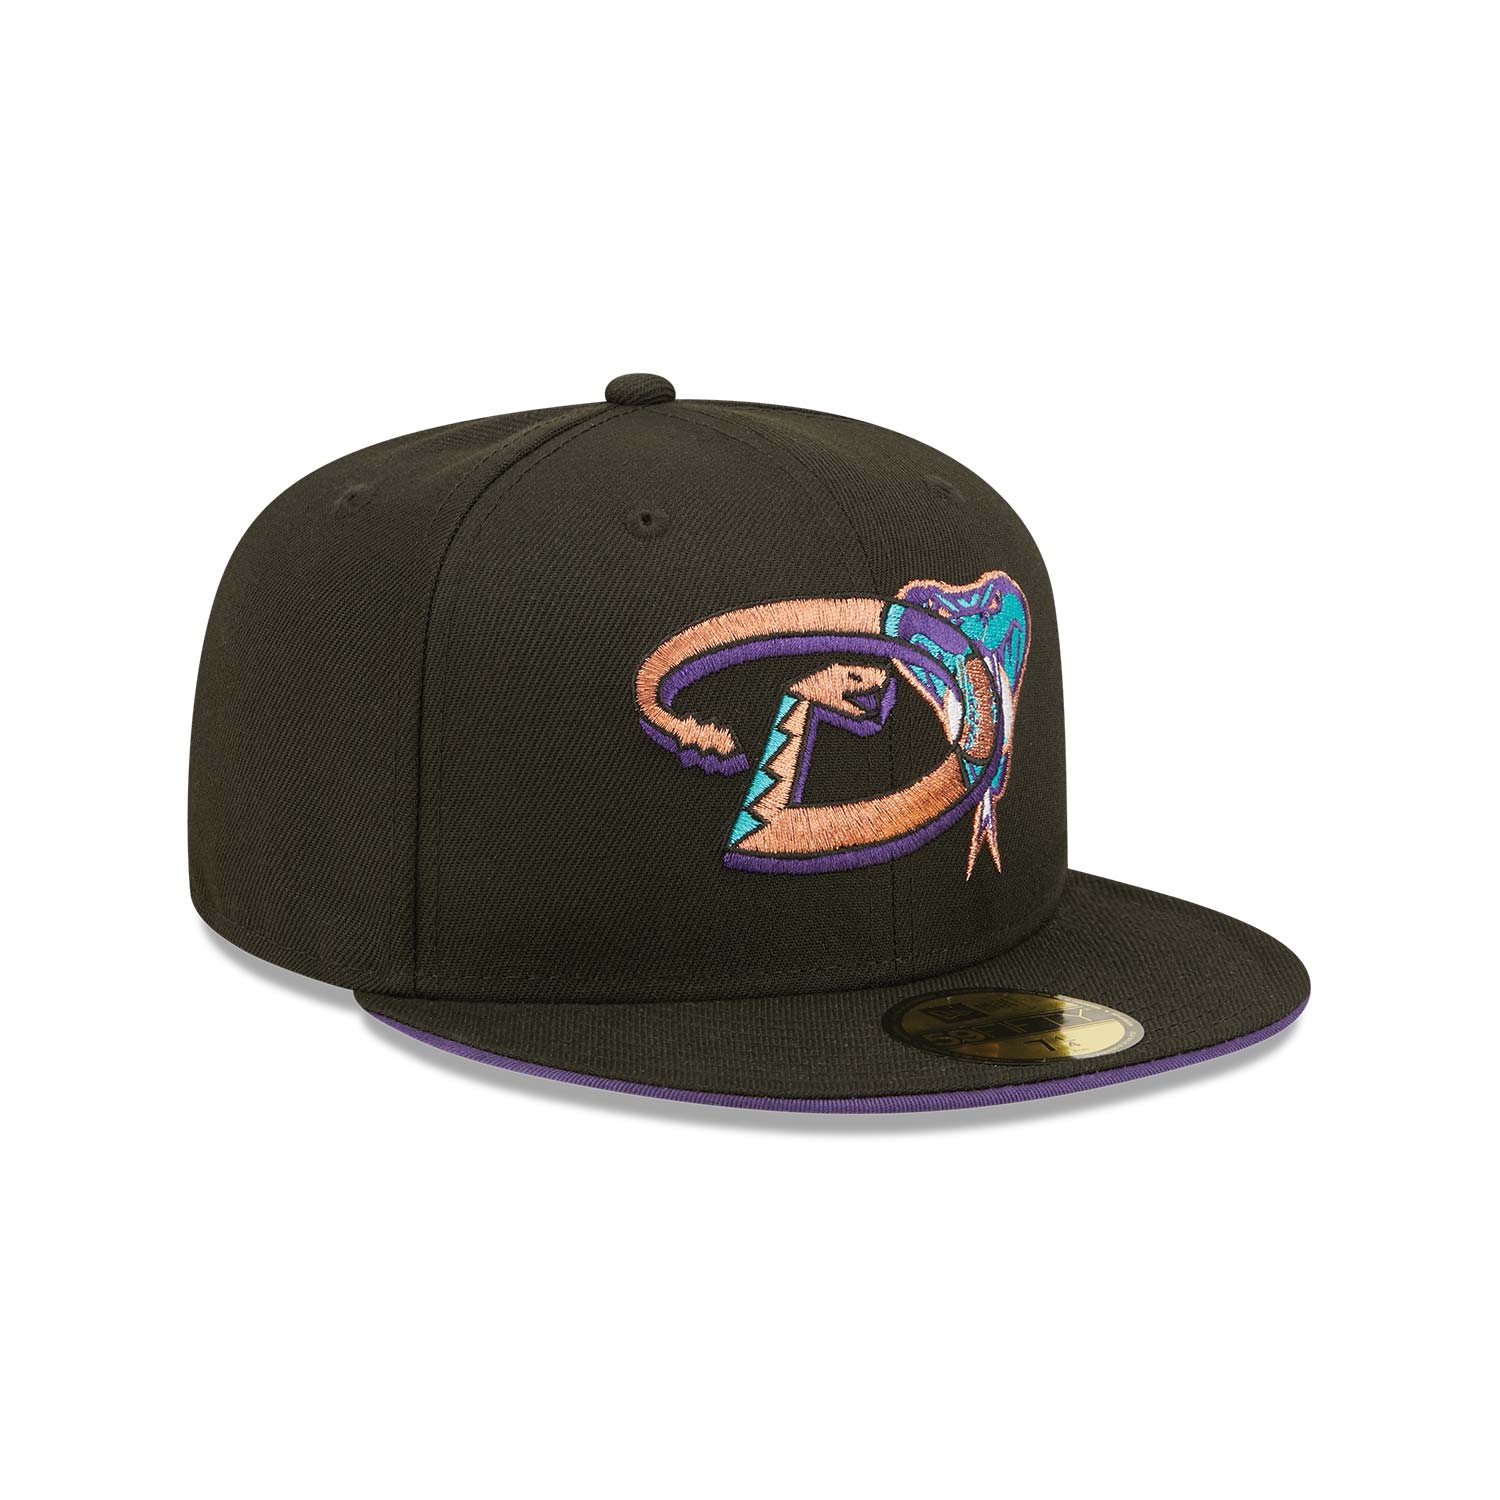 New Era 9FIFTY Arizona Diamondbacks Classic Trucker Snapback Hat Official Team Color